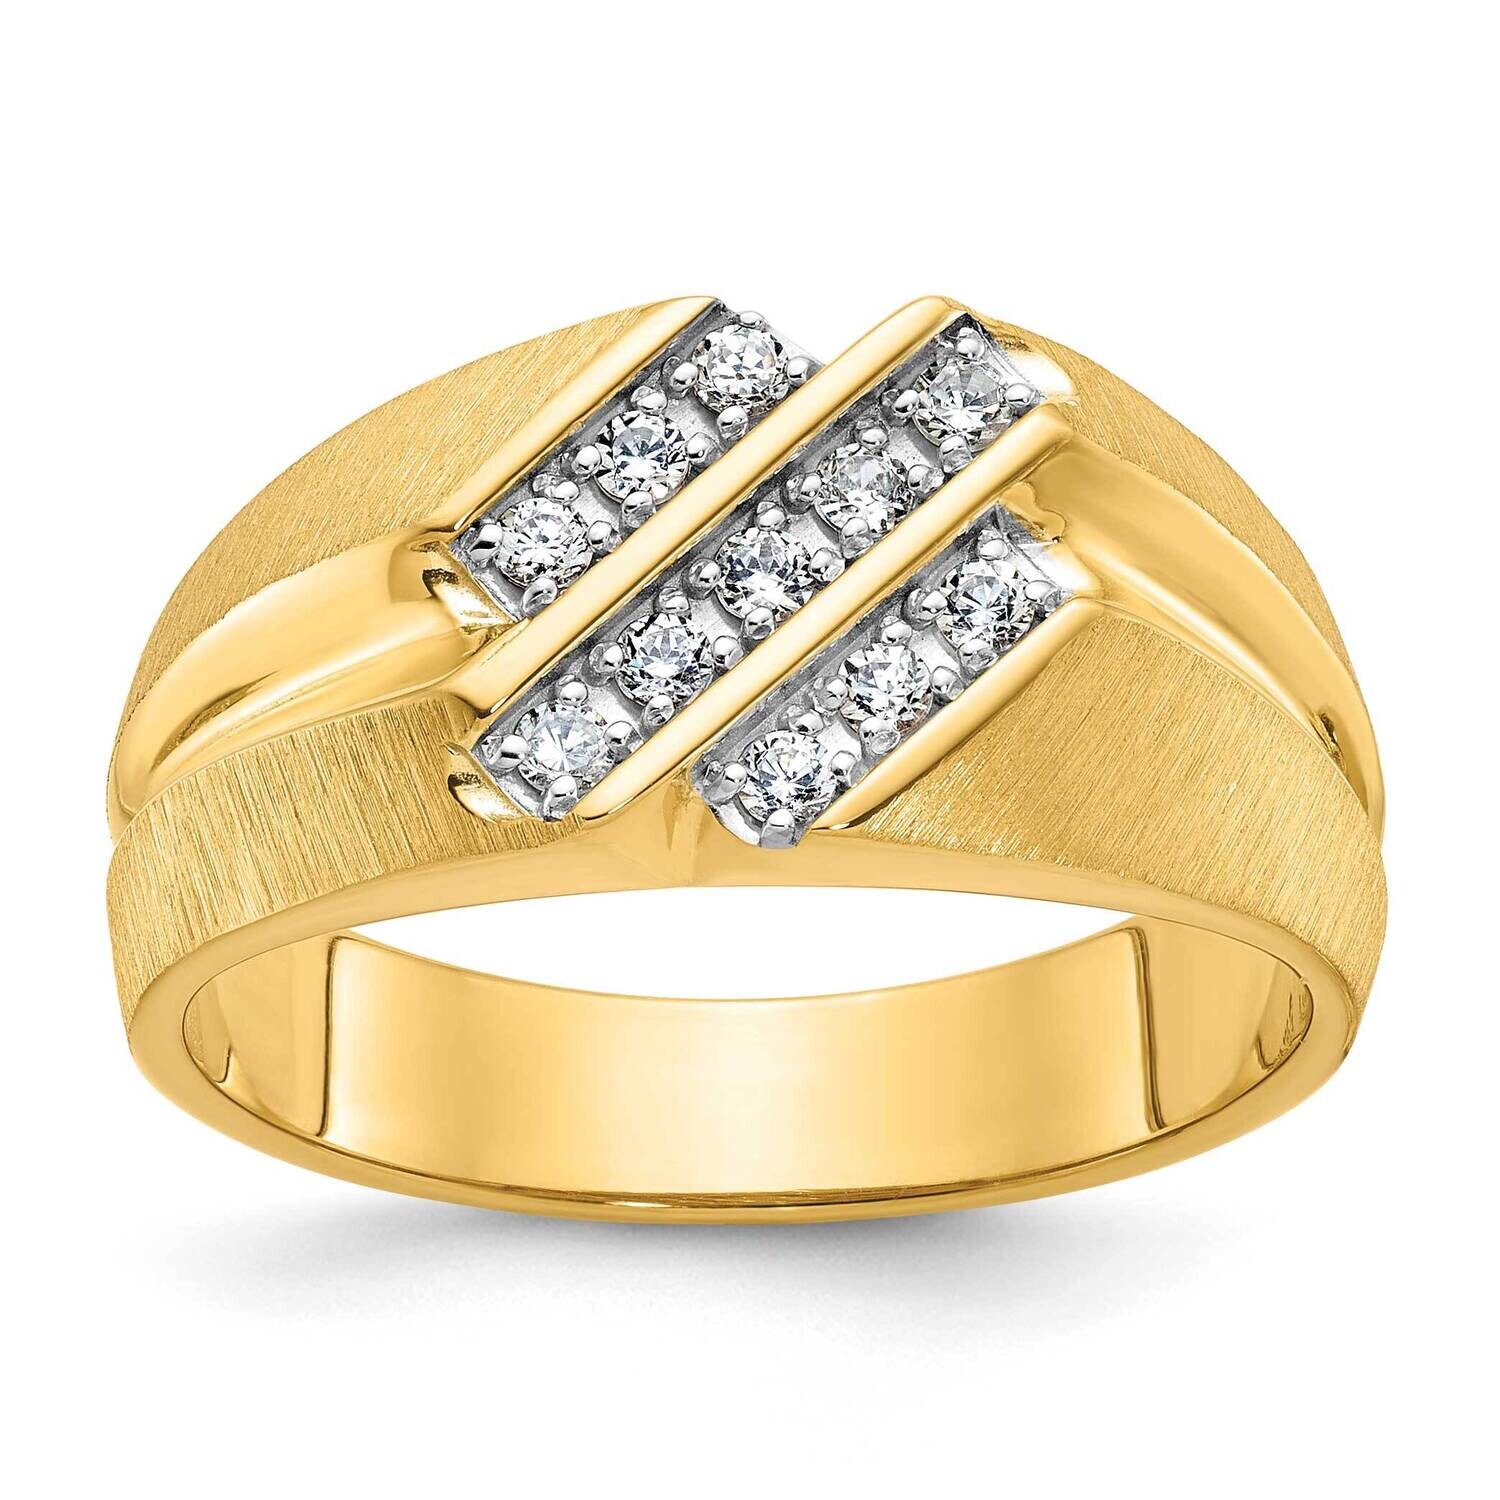 Ibgoodman Men's Polished Satin Grooved 1/4 Carat A Quality Diamond Ring 10k Gold B56689-0YA